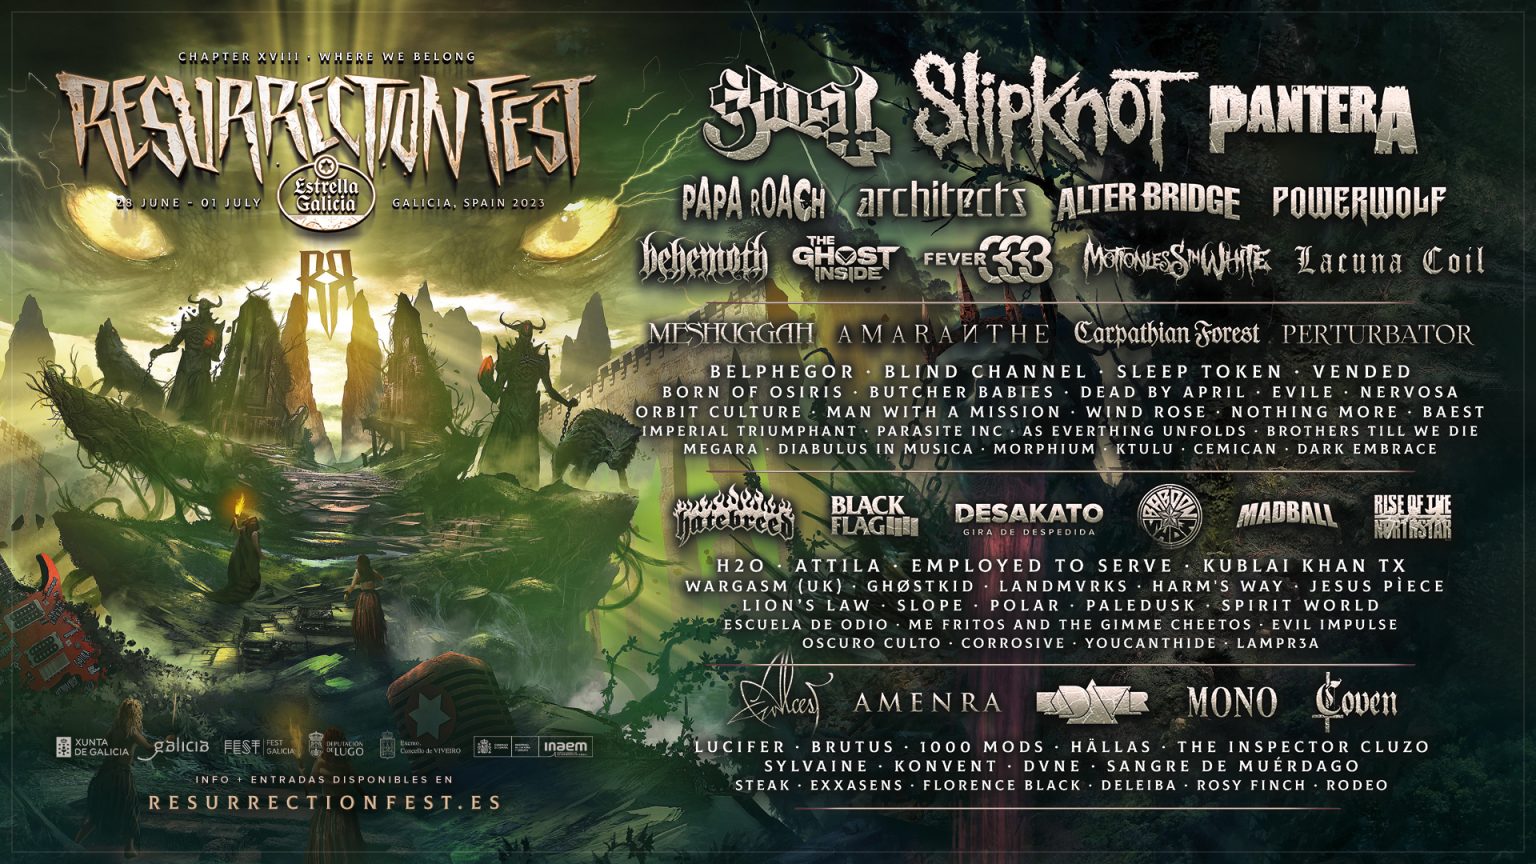 Resurrection Fest 2023 entradas casi agotadas con Slipknot, Pantera y